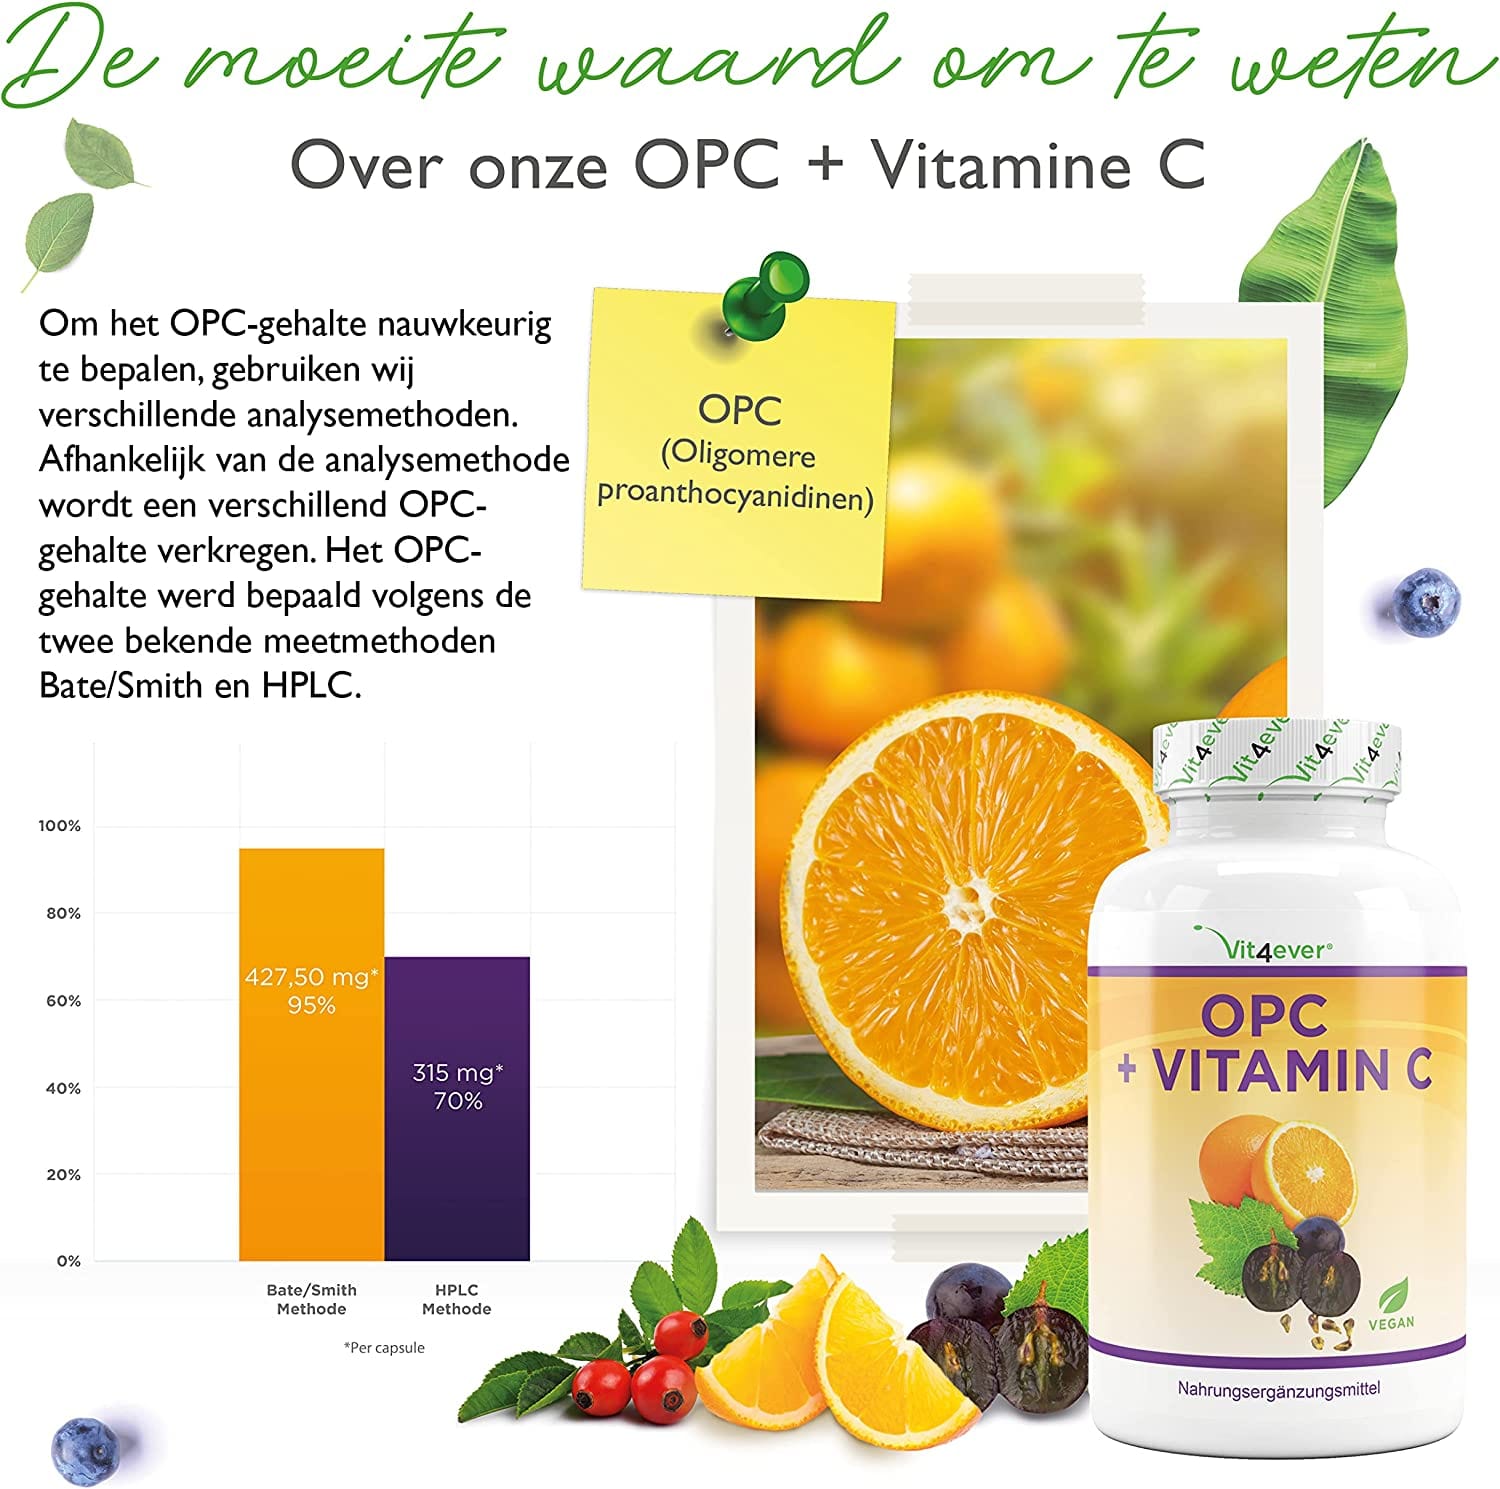 OPC Druivenpit Extract + Natuurlijke Vitamine C | 95% Oligomere Proanthocyanidinen | 240 capsules | Vit4ever